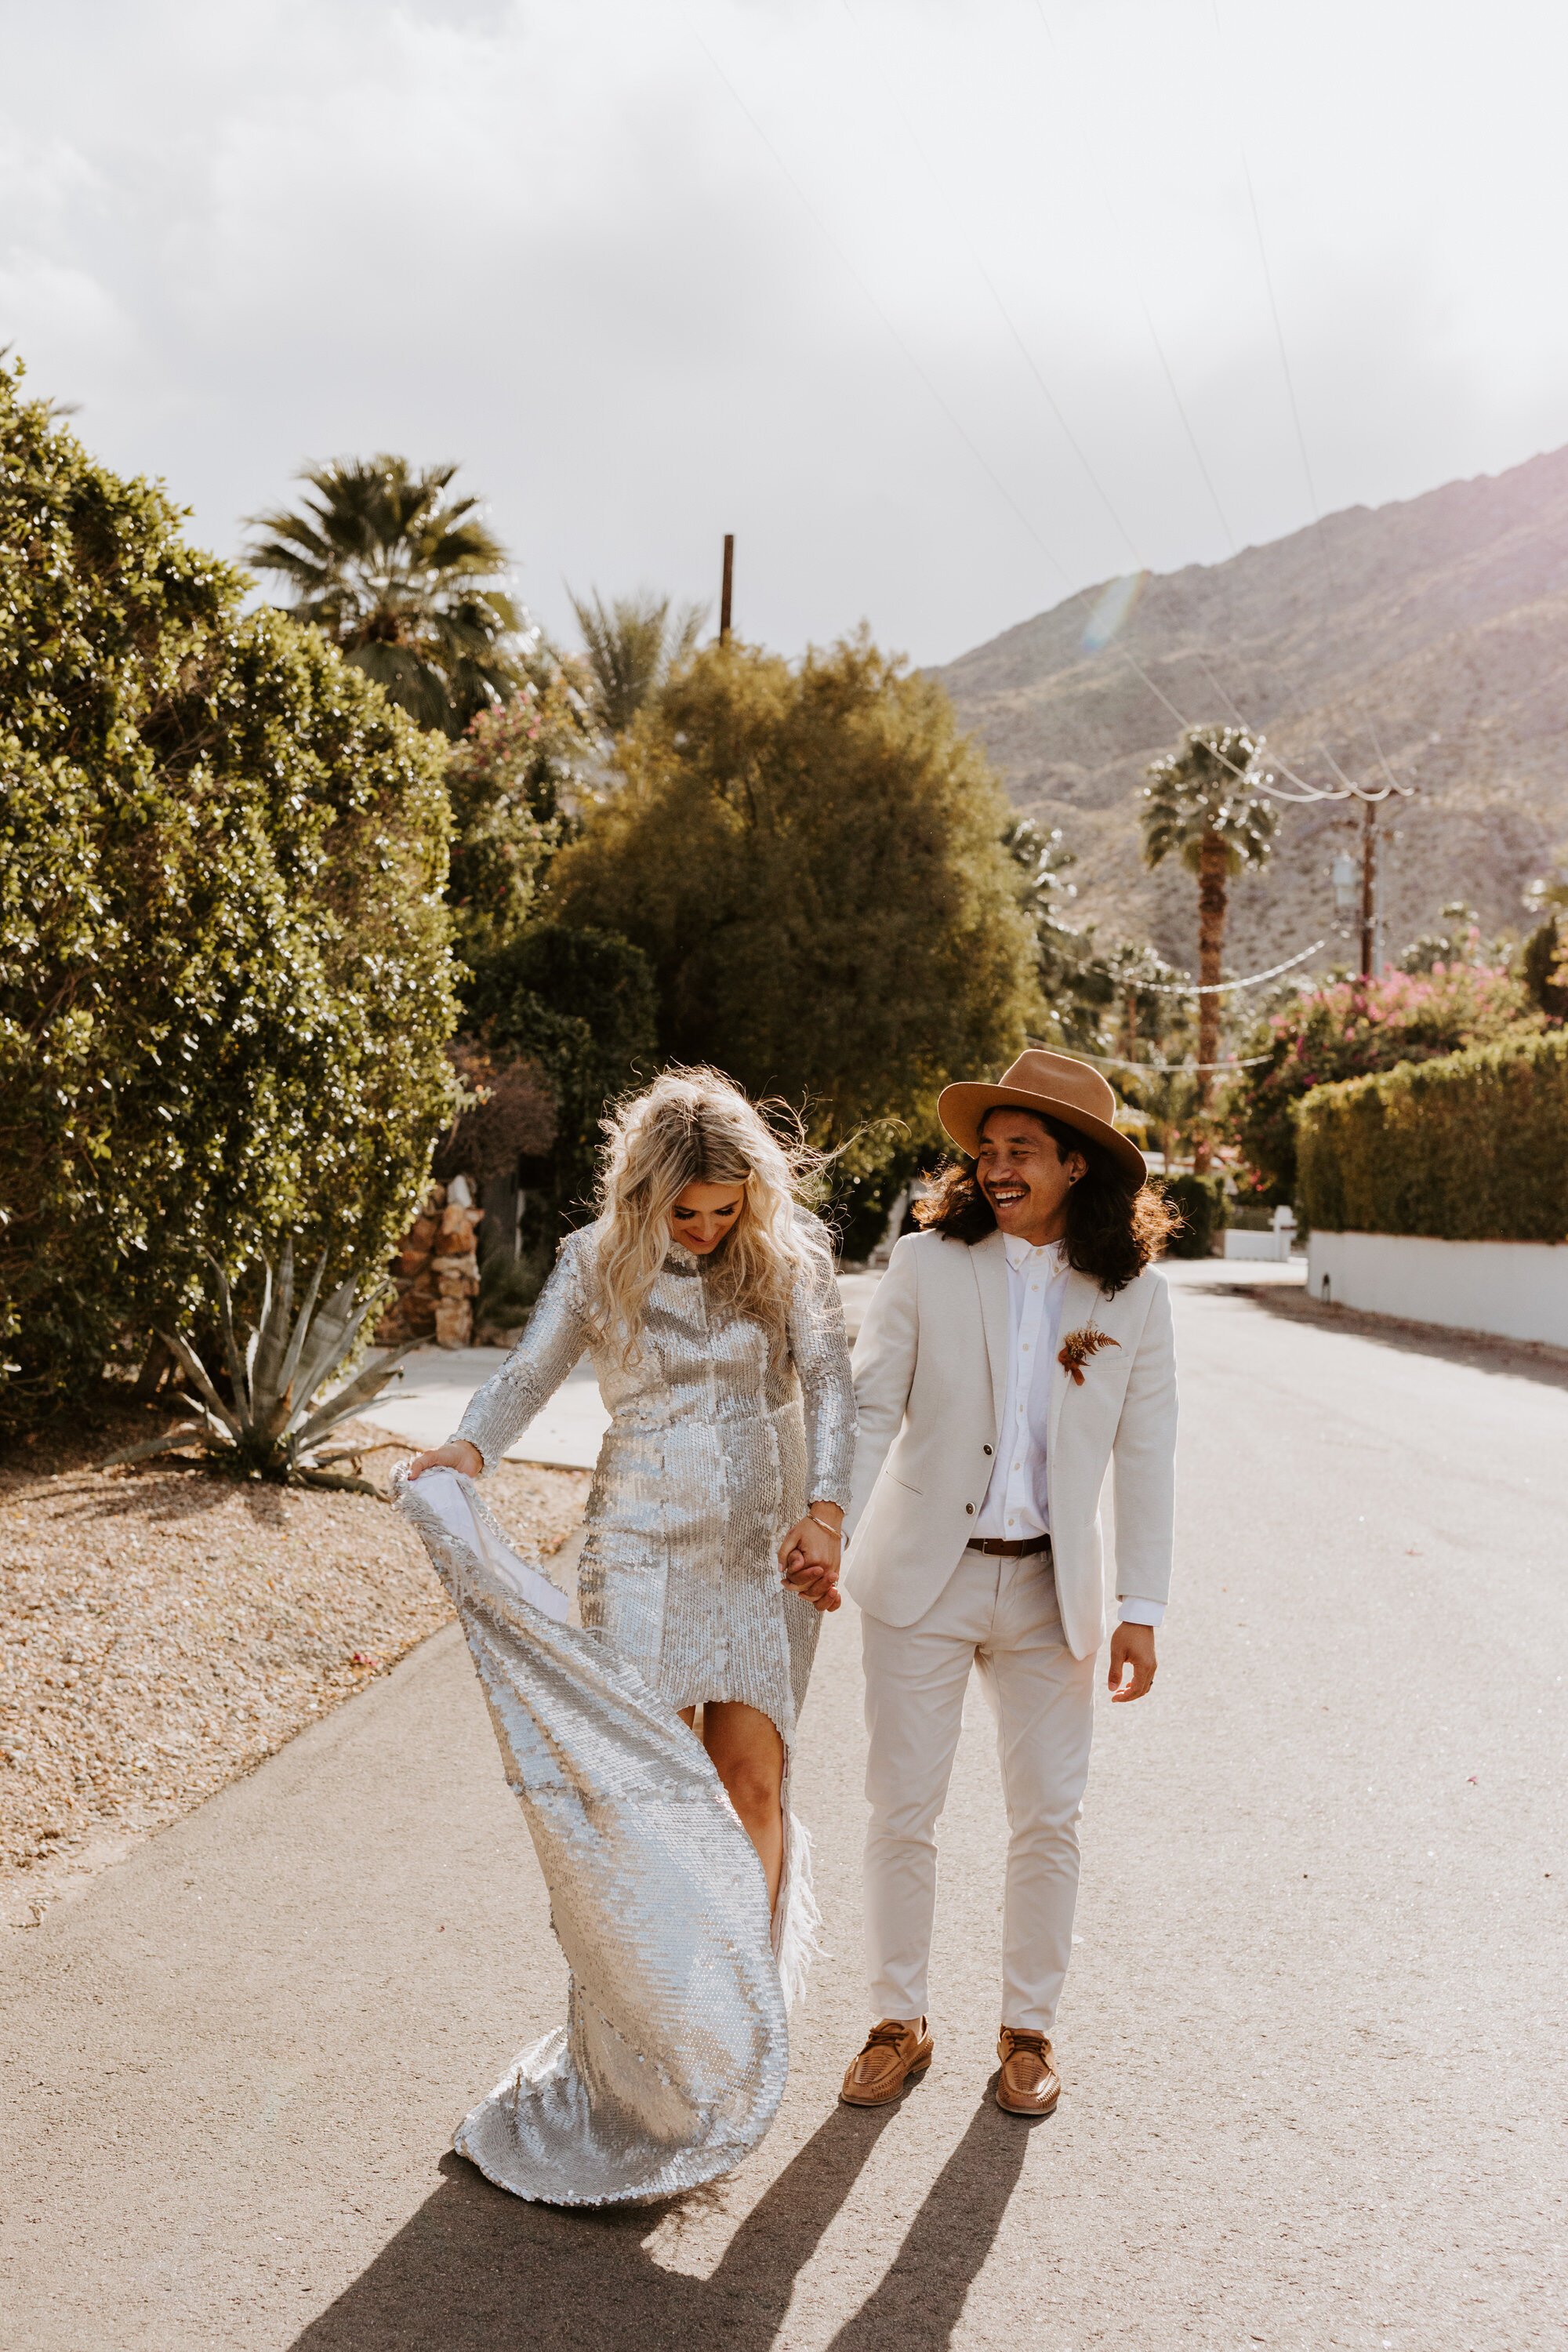 Palm Springs elopement | Silver sequin wedding dress | Palm Springs Wedding Photographer | Tida Svy | www.tidasvy.com